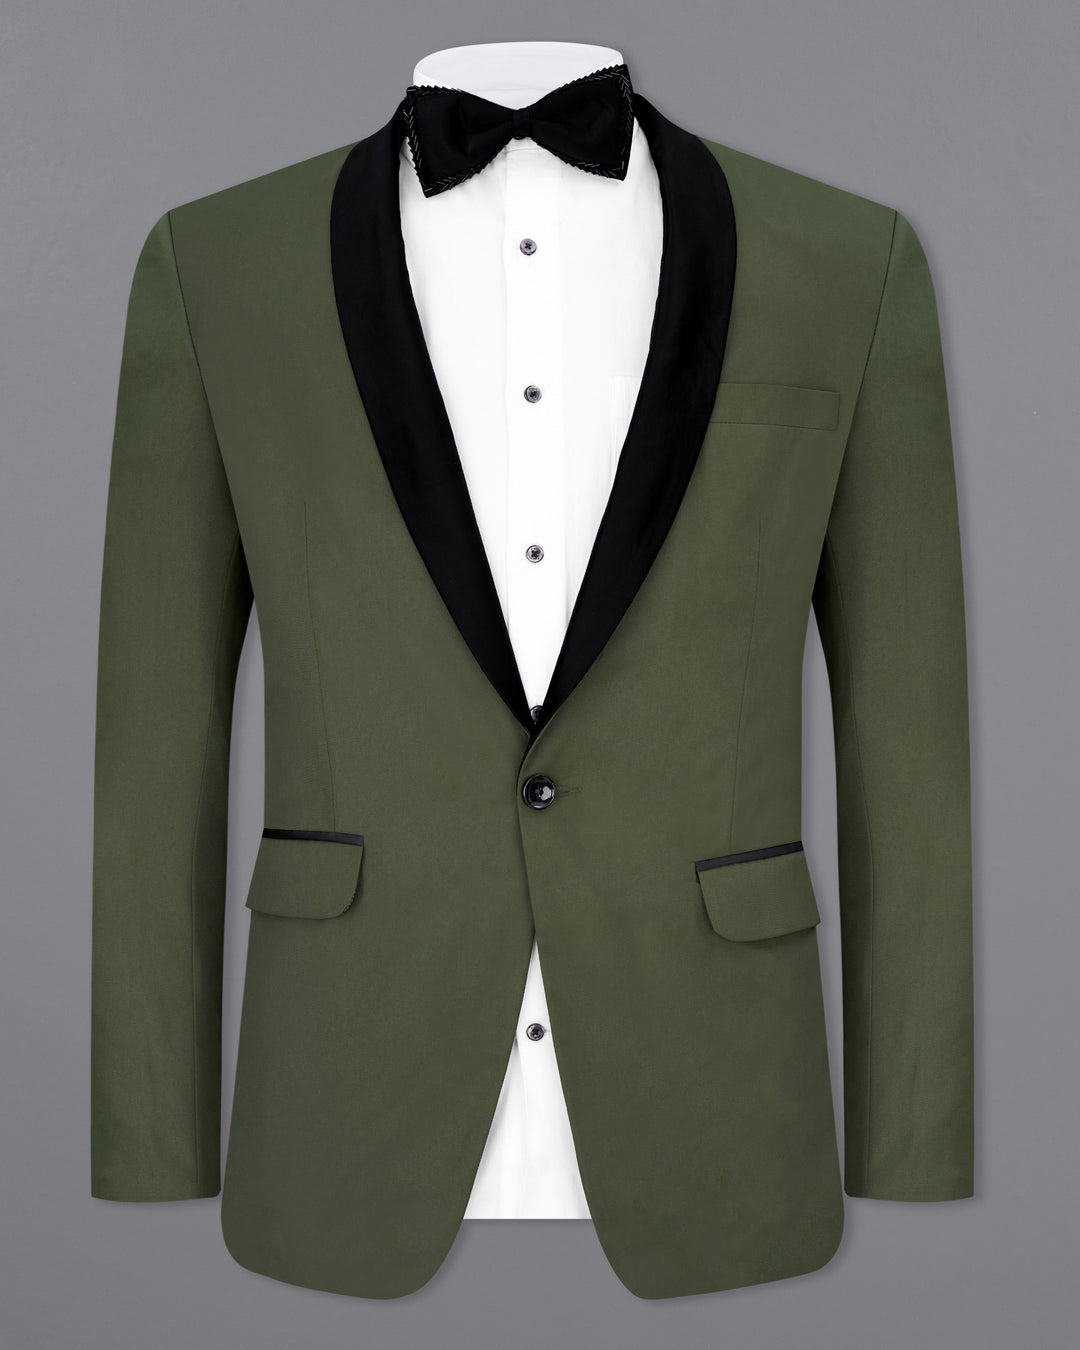 How to style a black blazer with khaki pants - Quora